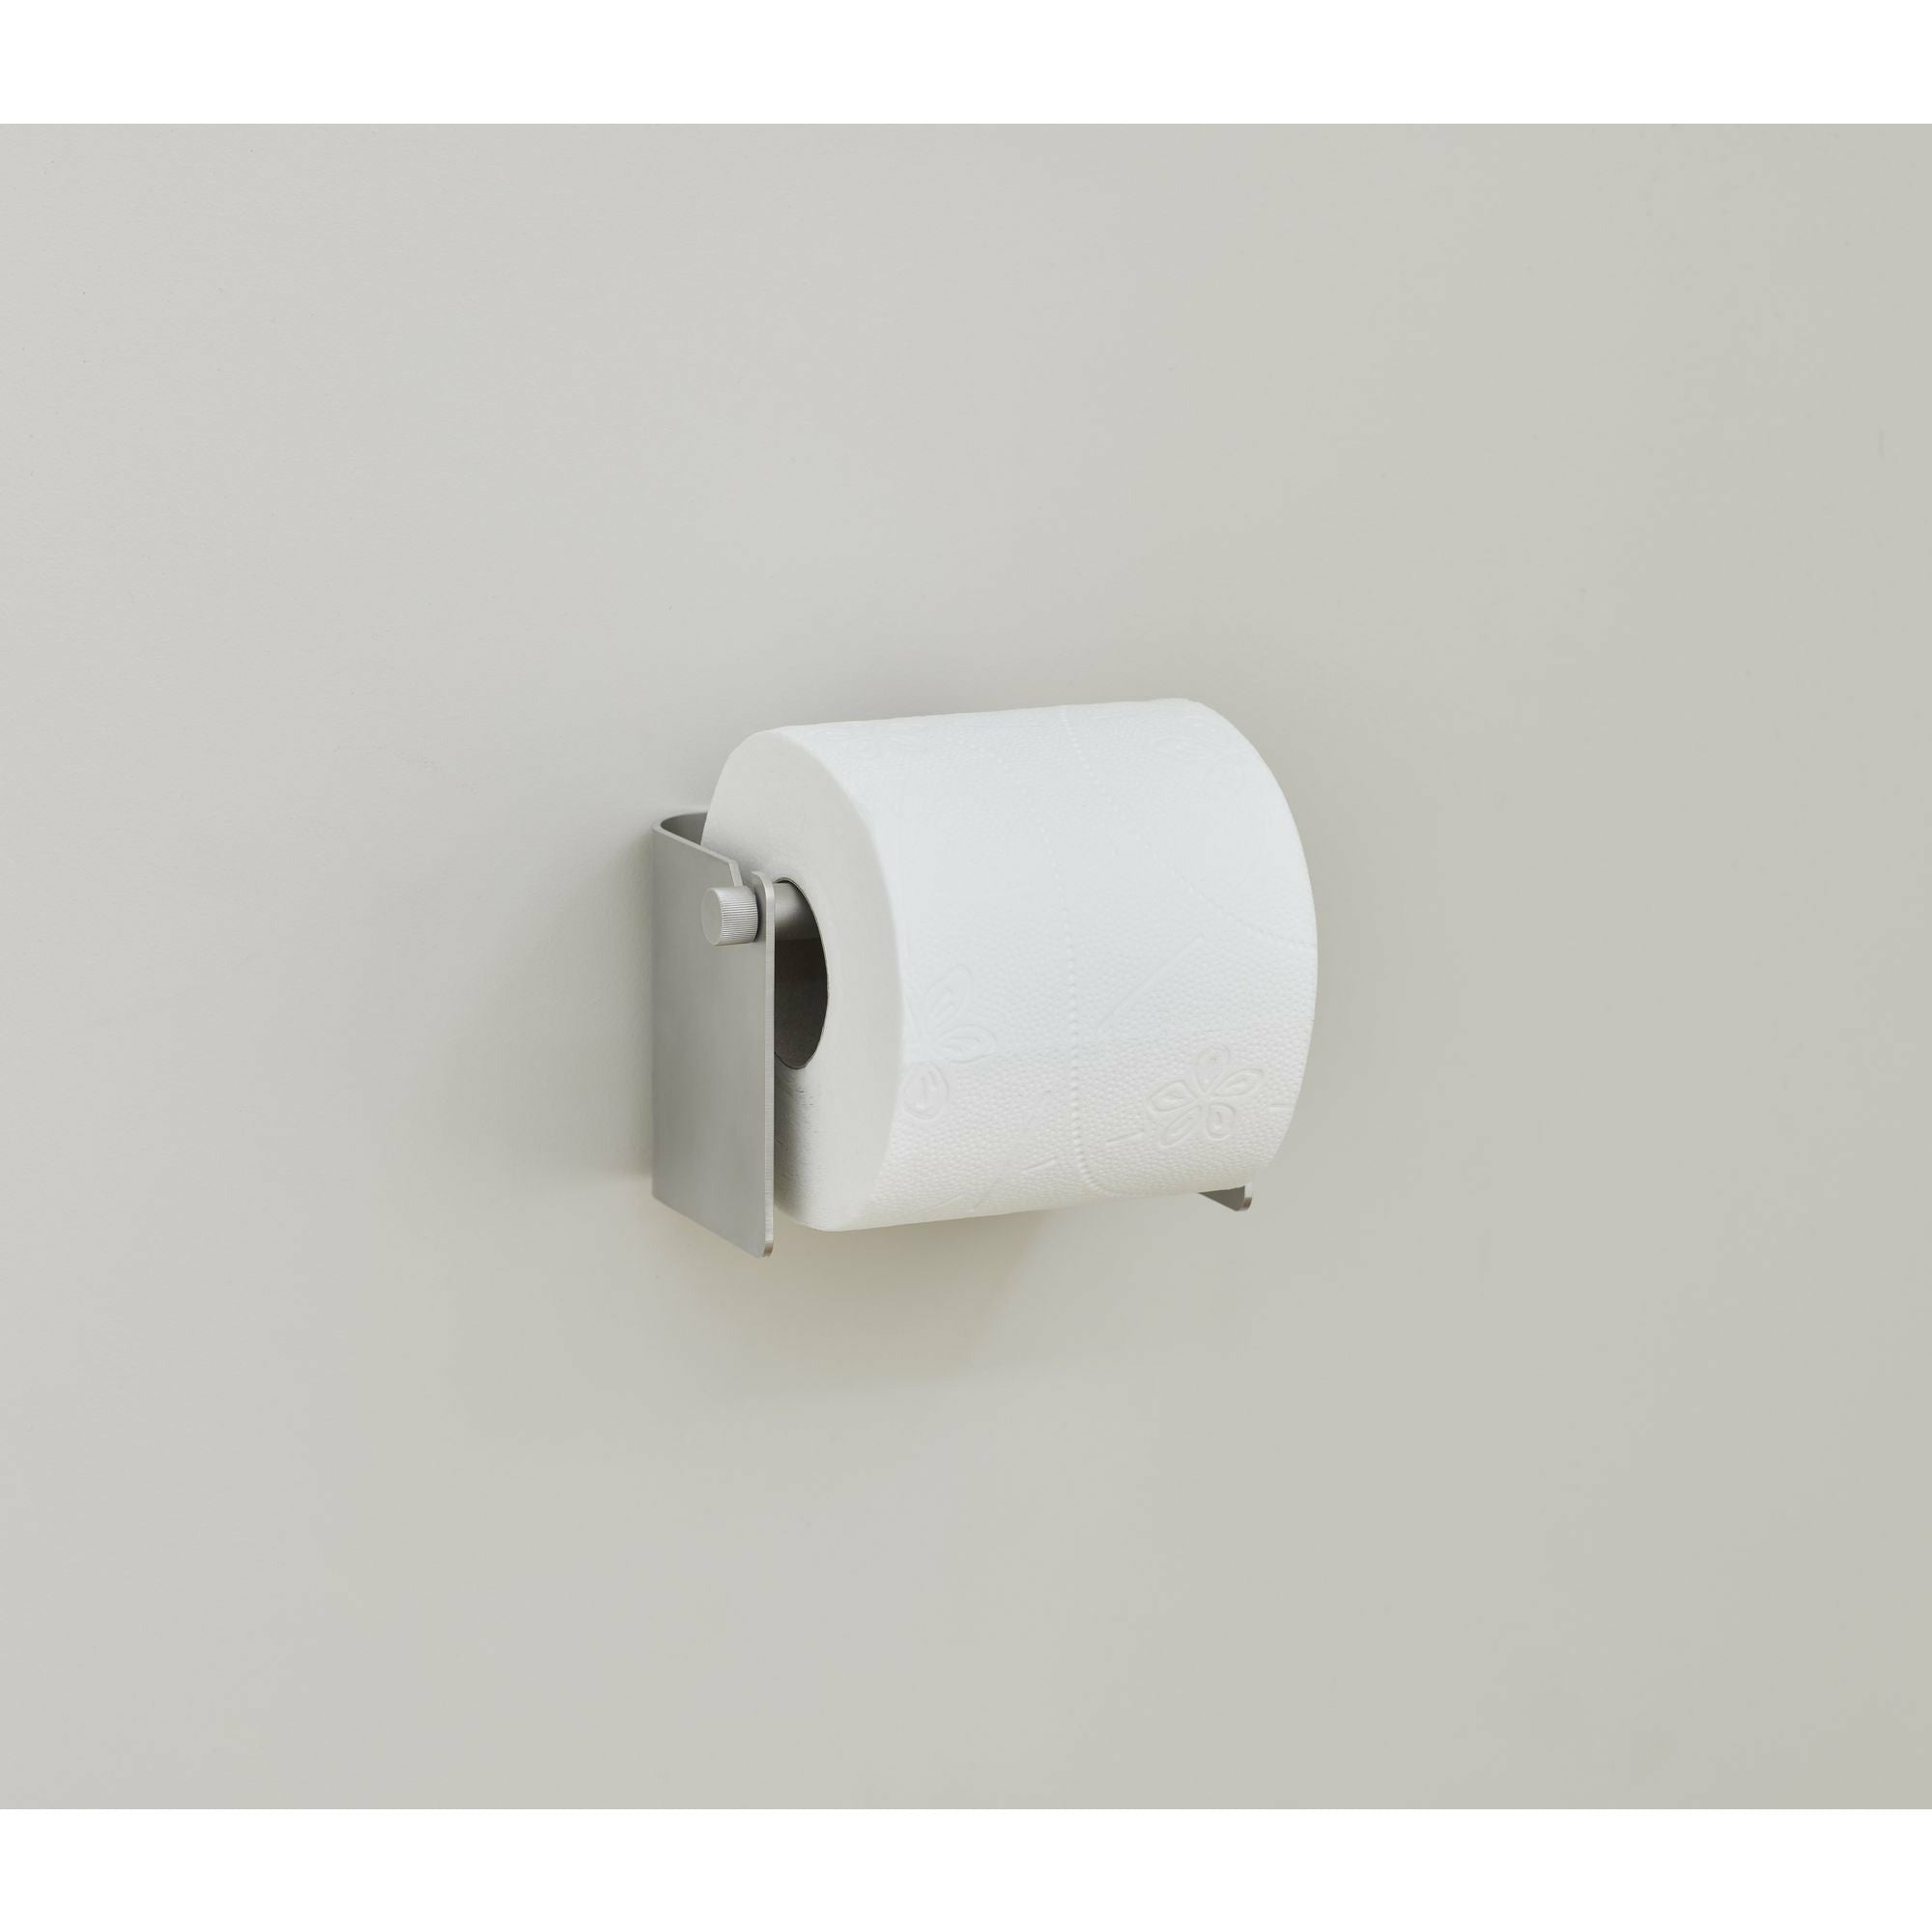 Form & Refine Boog toiletrol houder. Staal